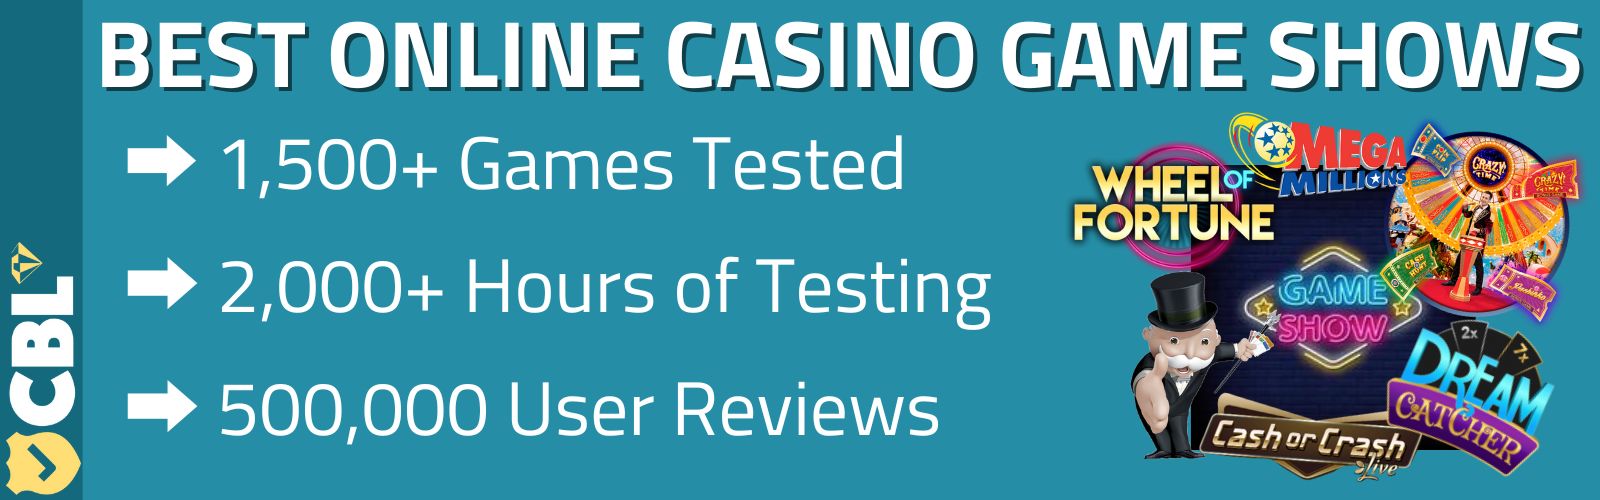 Best Online Casino Games Shows